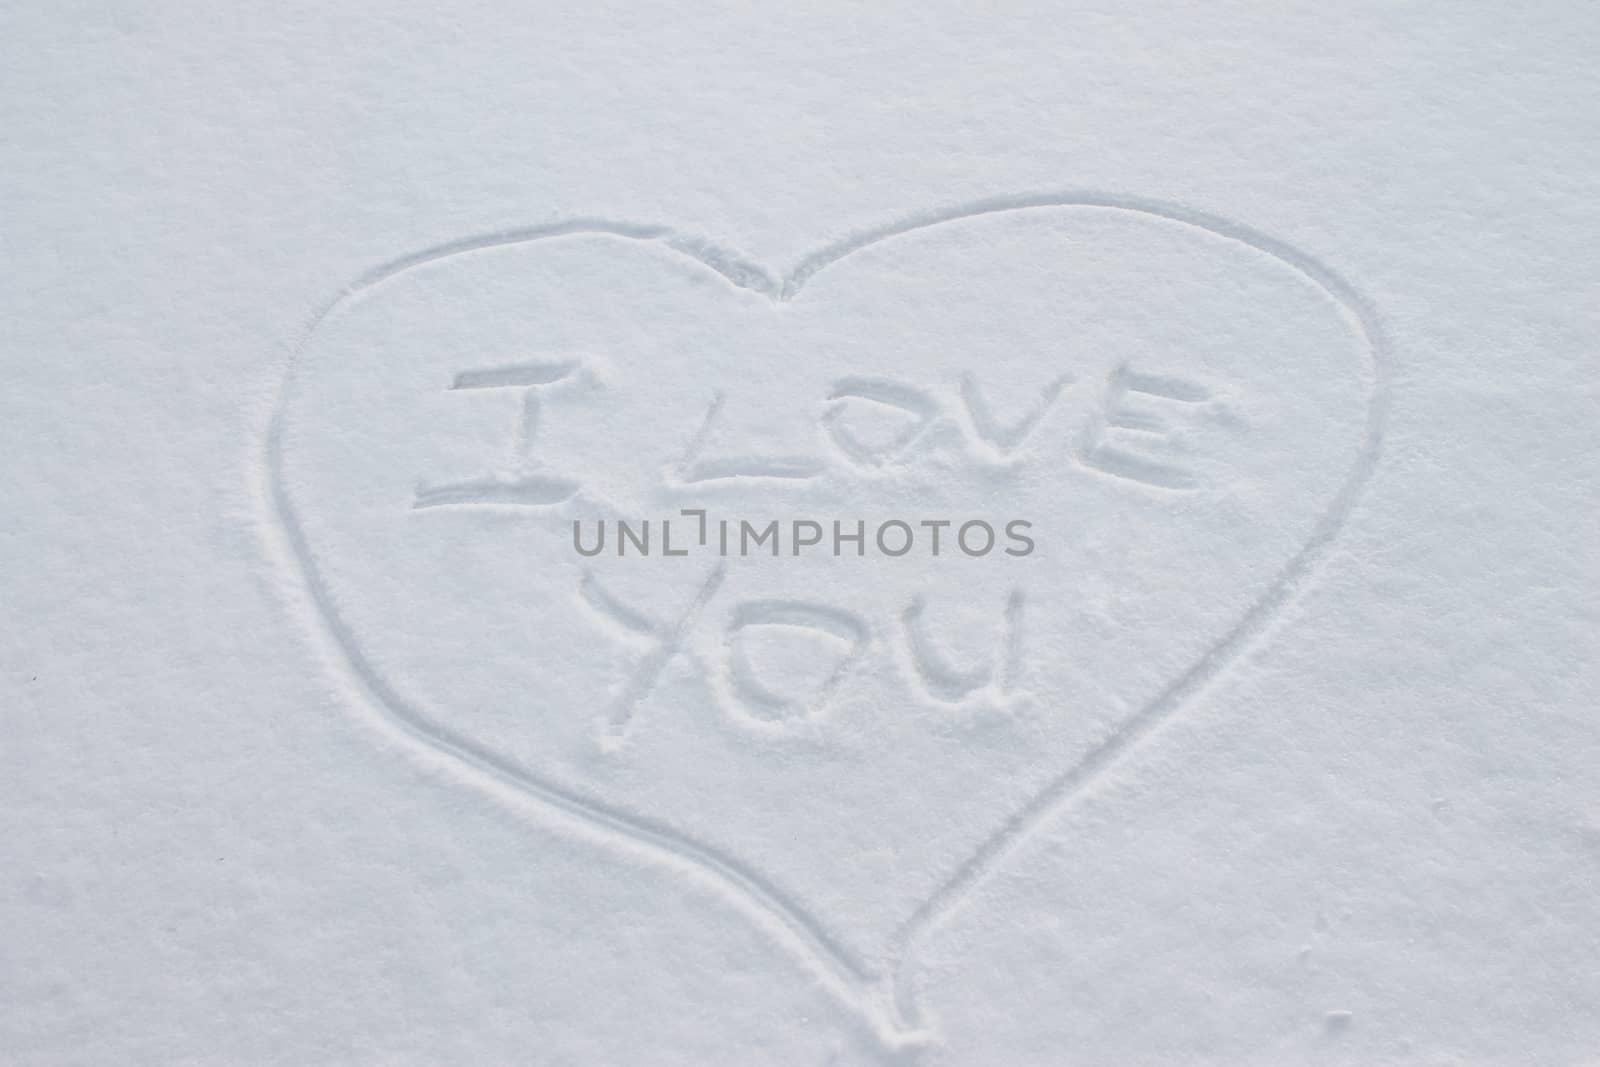 The inscription on the snow, "I love you" inside the heart